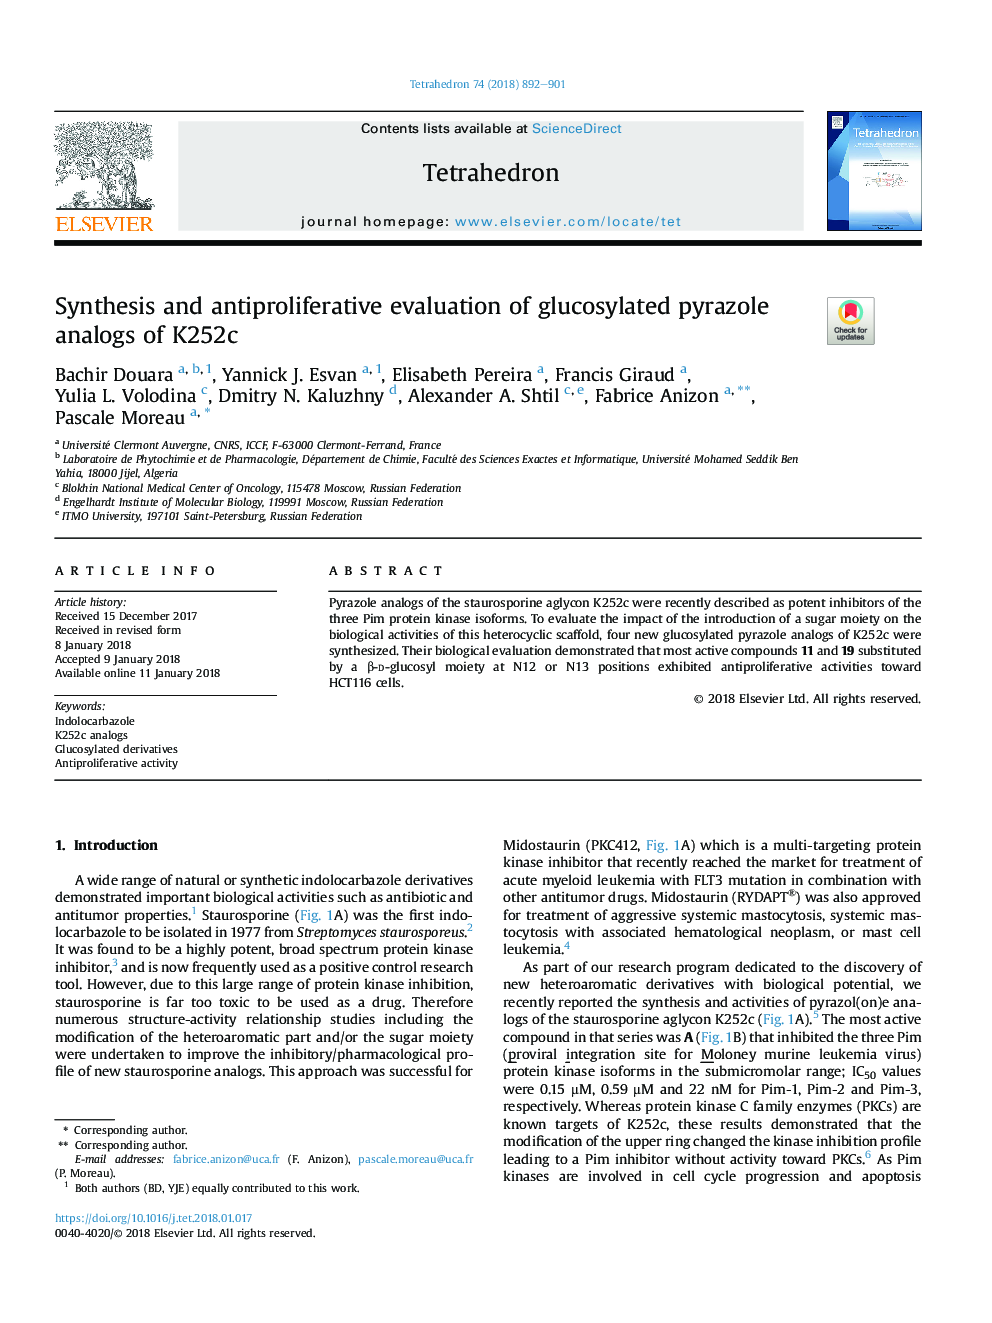 Synthesis and antiproliferative evaluation of glucosylated pyrazole analogs of K252c